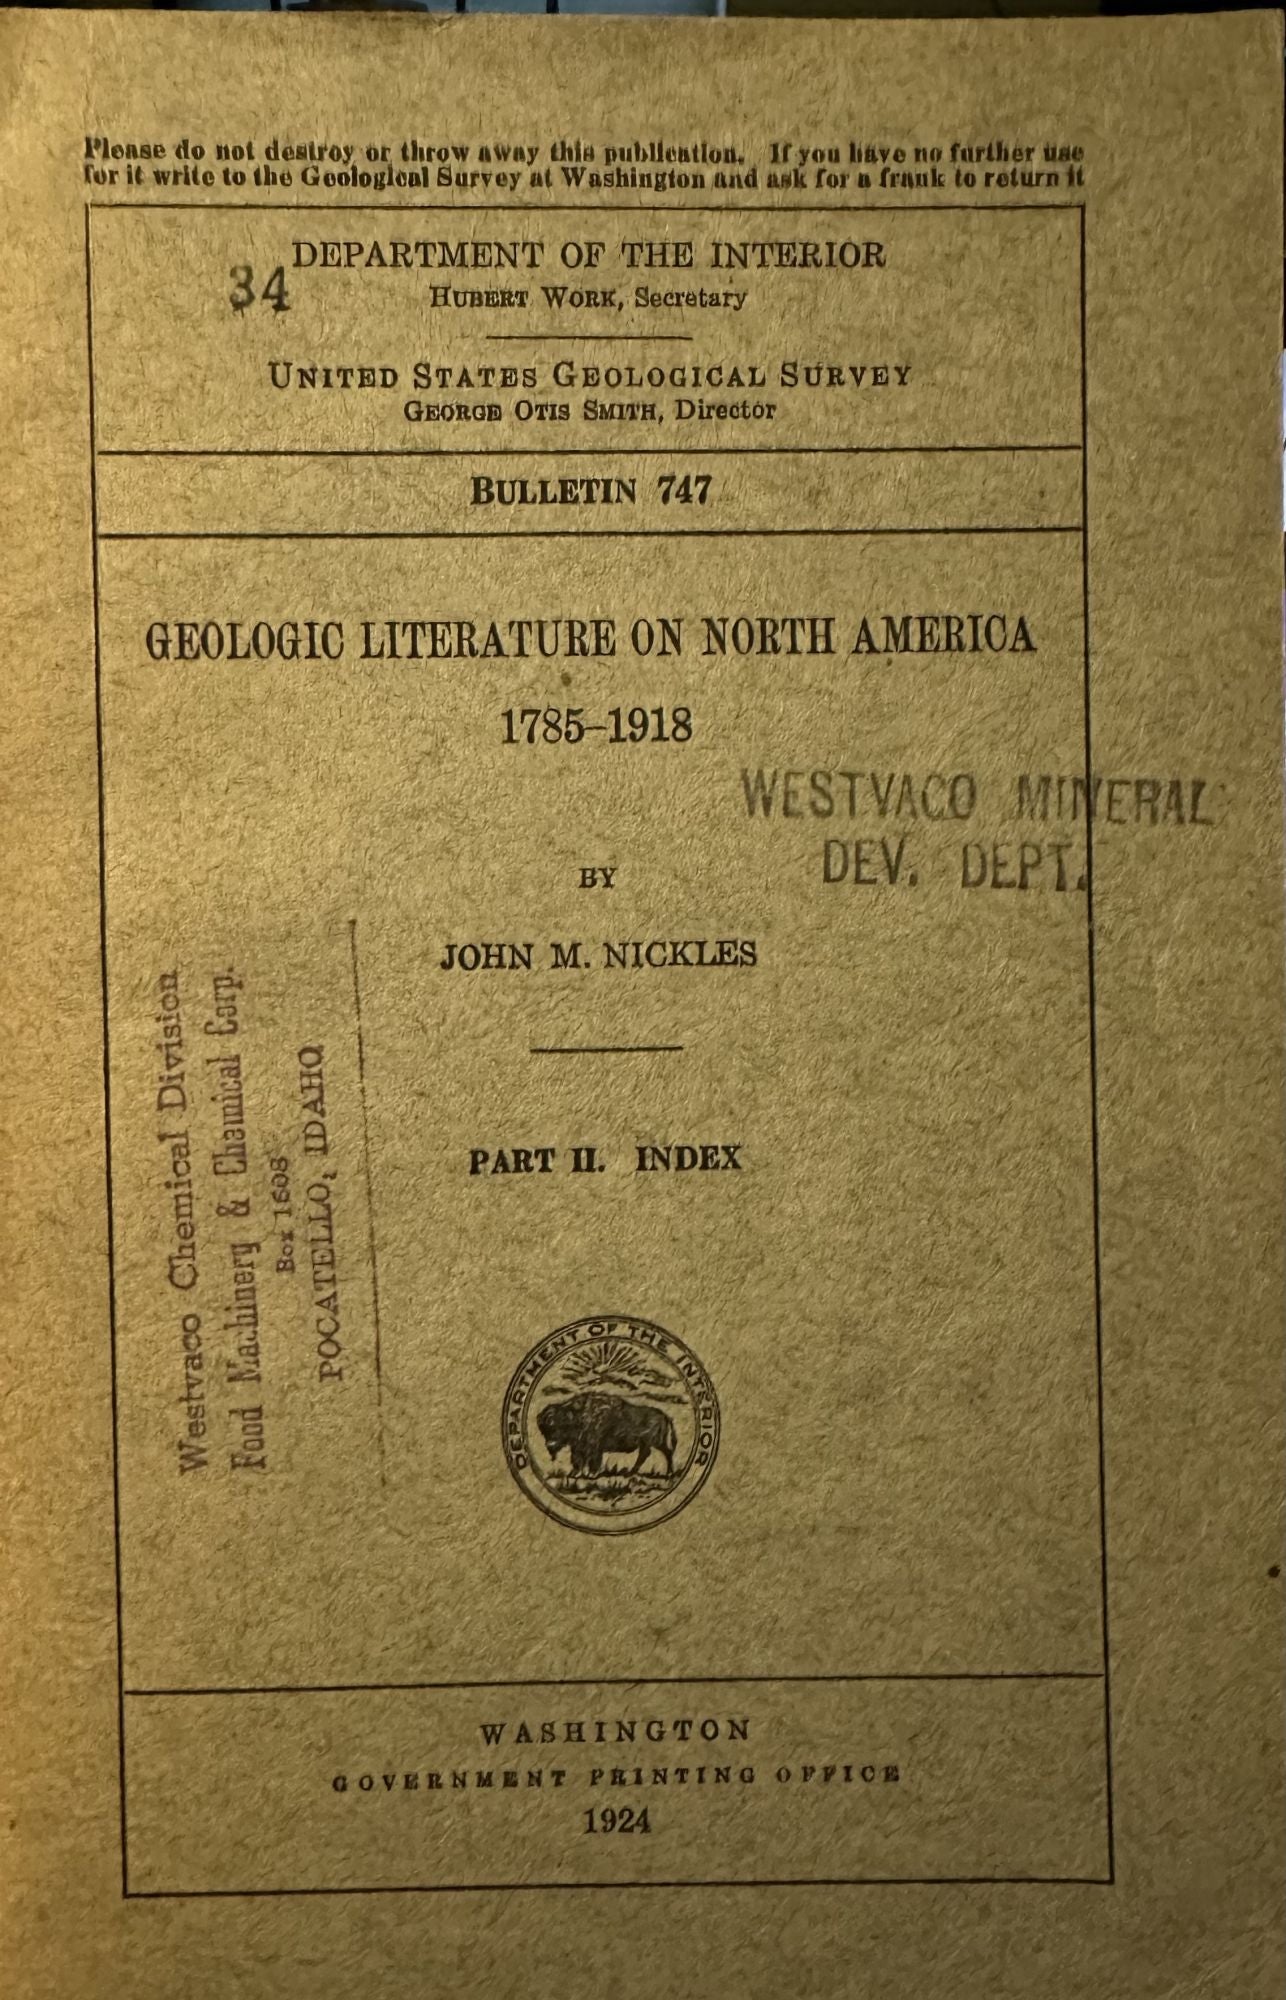 Geologic Literature of North America 1785-1918 Part II. Index. John M. Nickles.